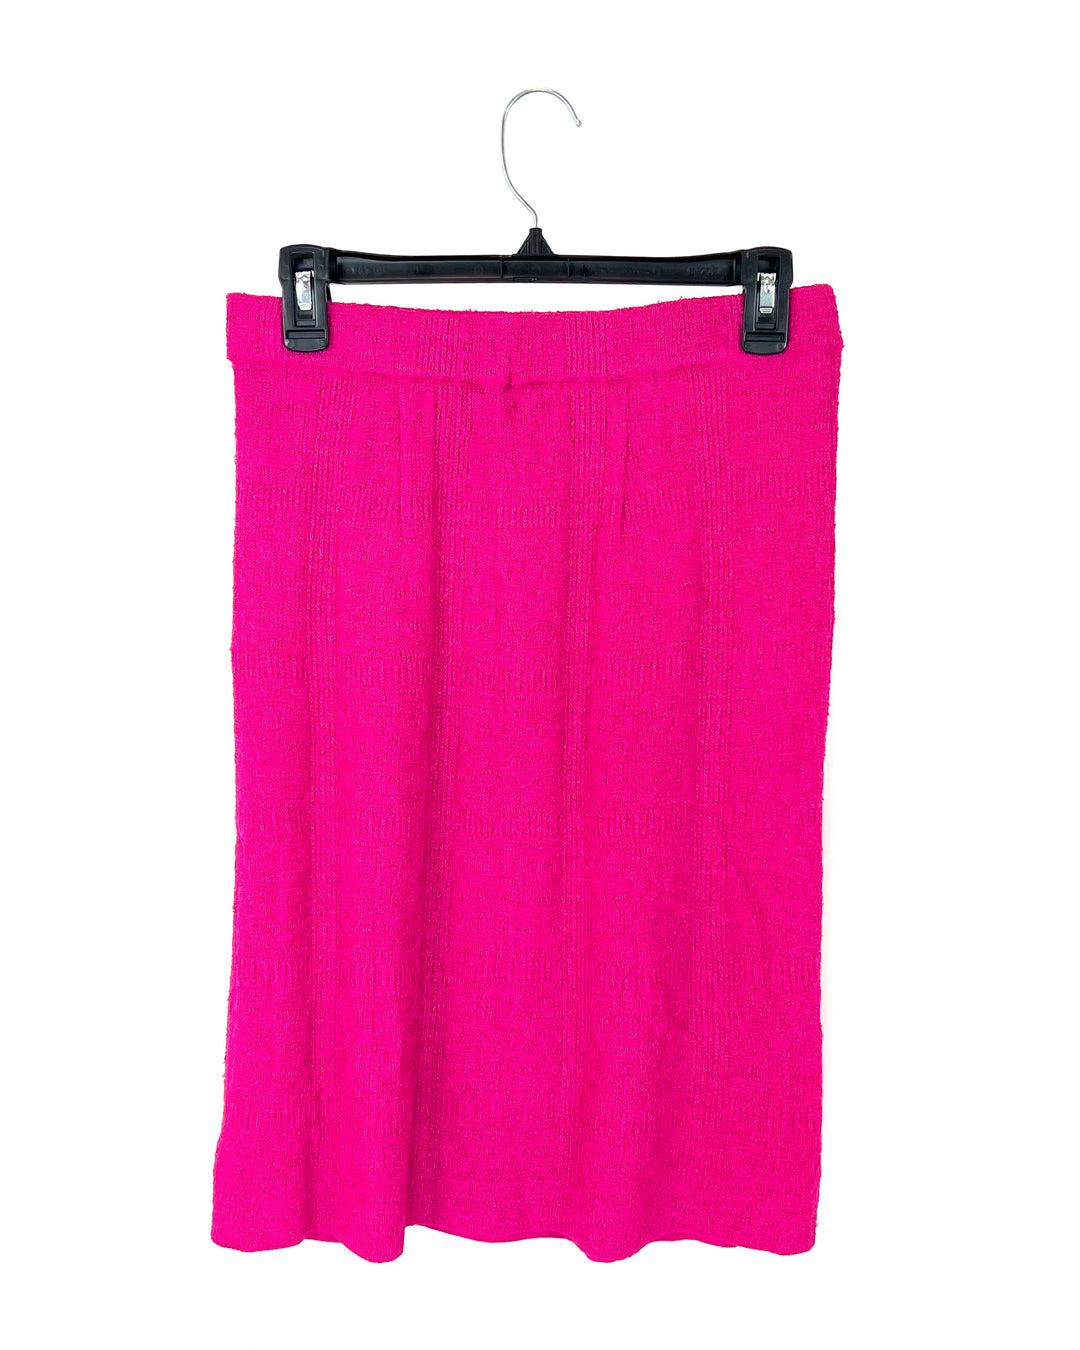 Pink Knit Skirt - Size 2-4